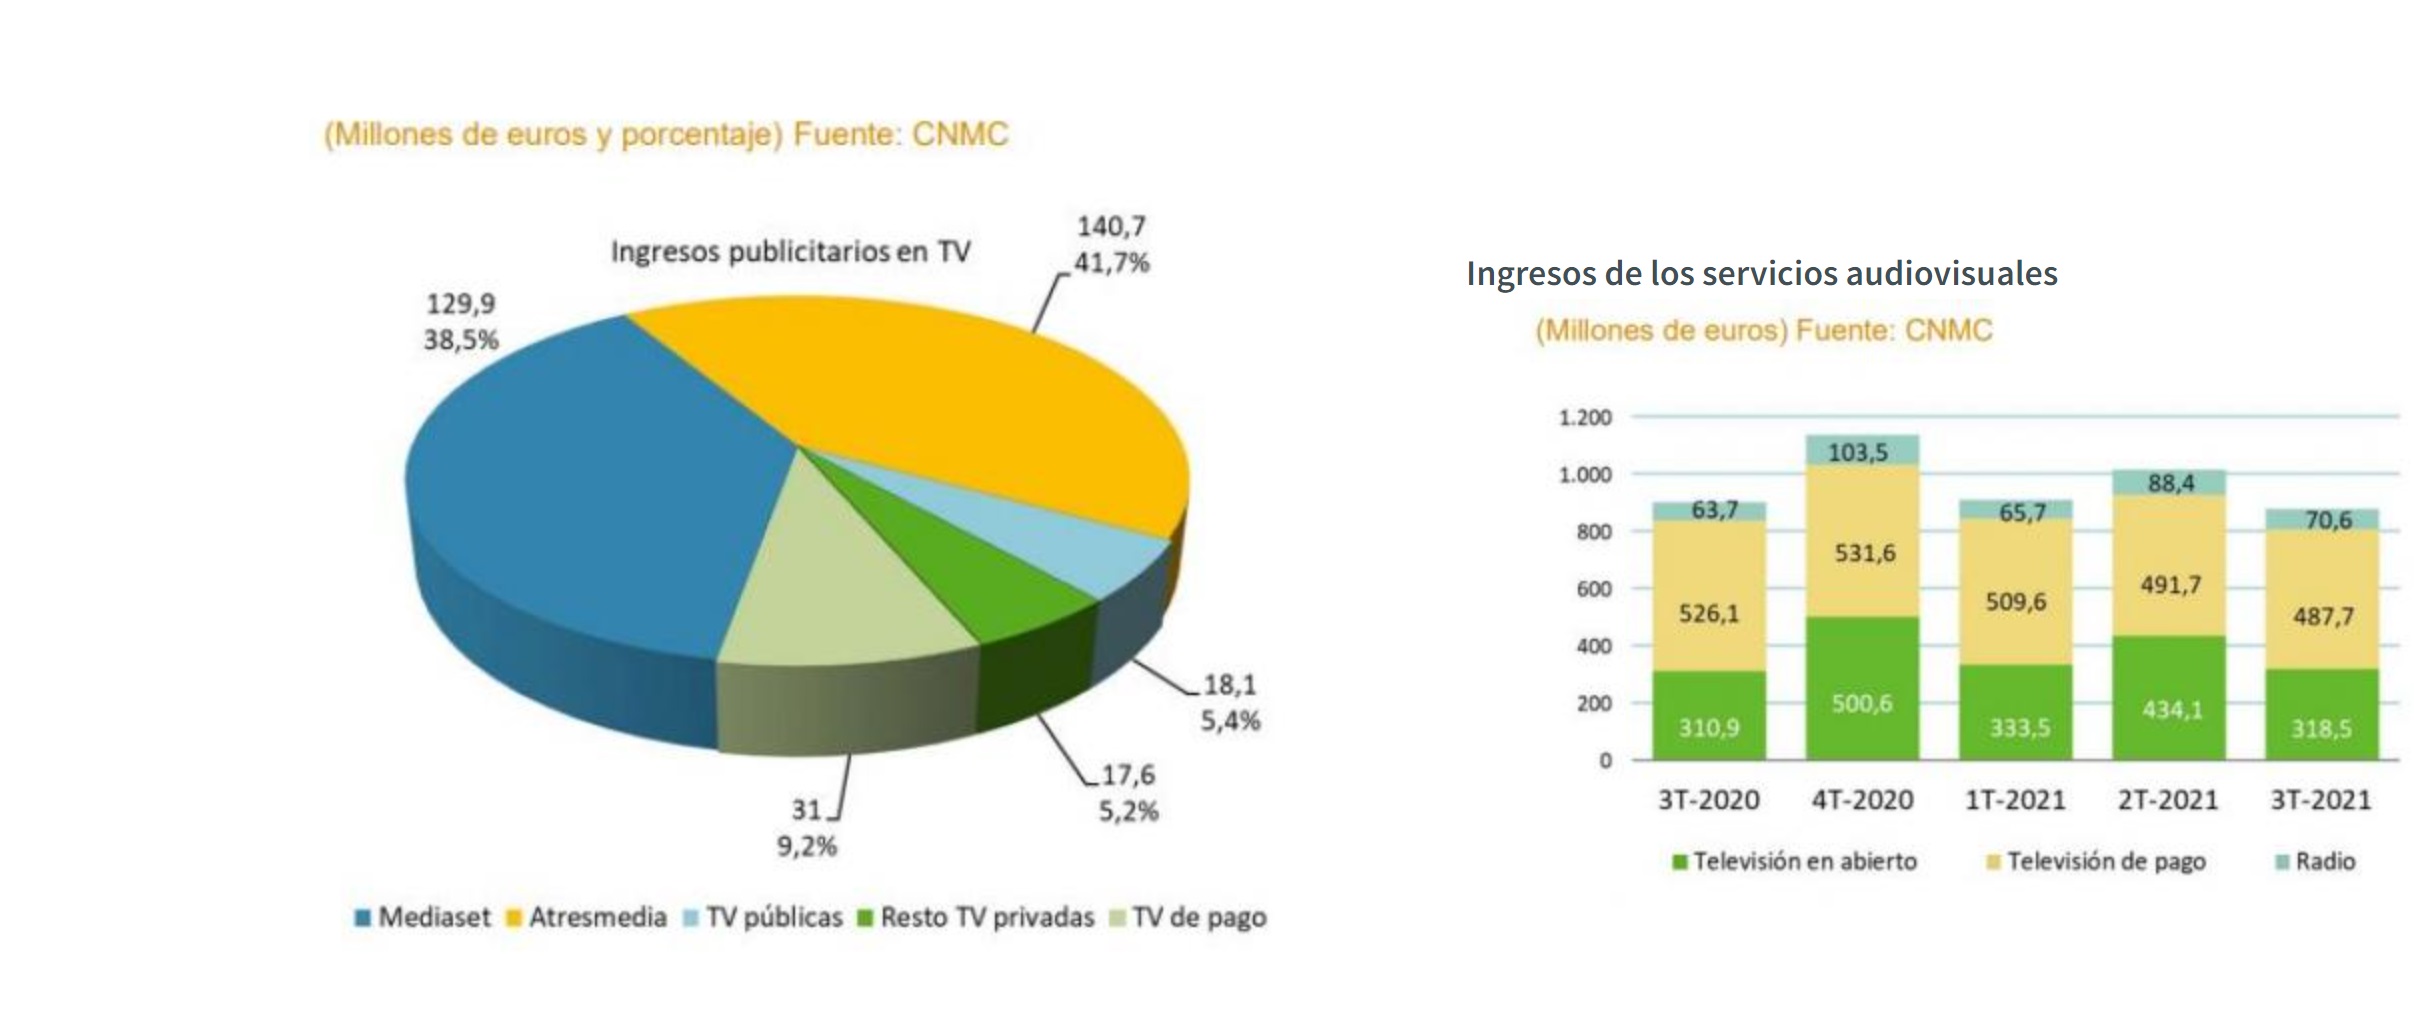 cnmc, 3t, audiovisuales,atresmedia,mediaset, ingresos publicitarios, publicidad, tv, programapublicidad